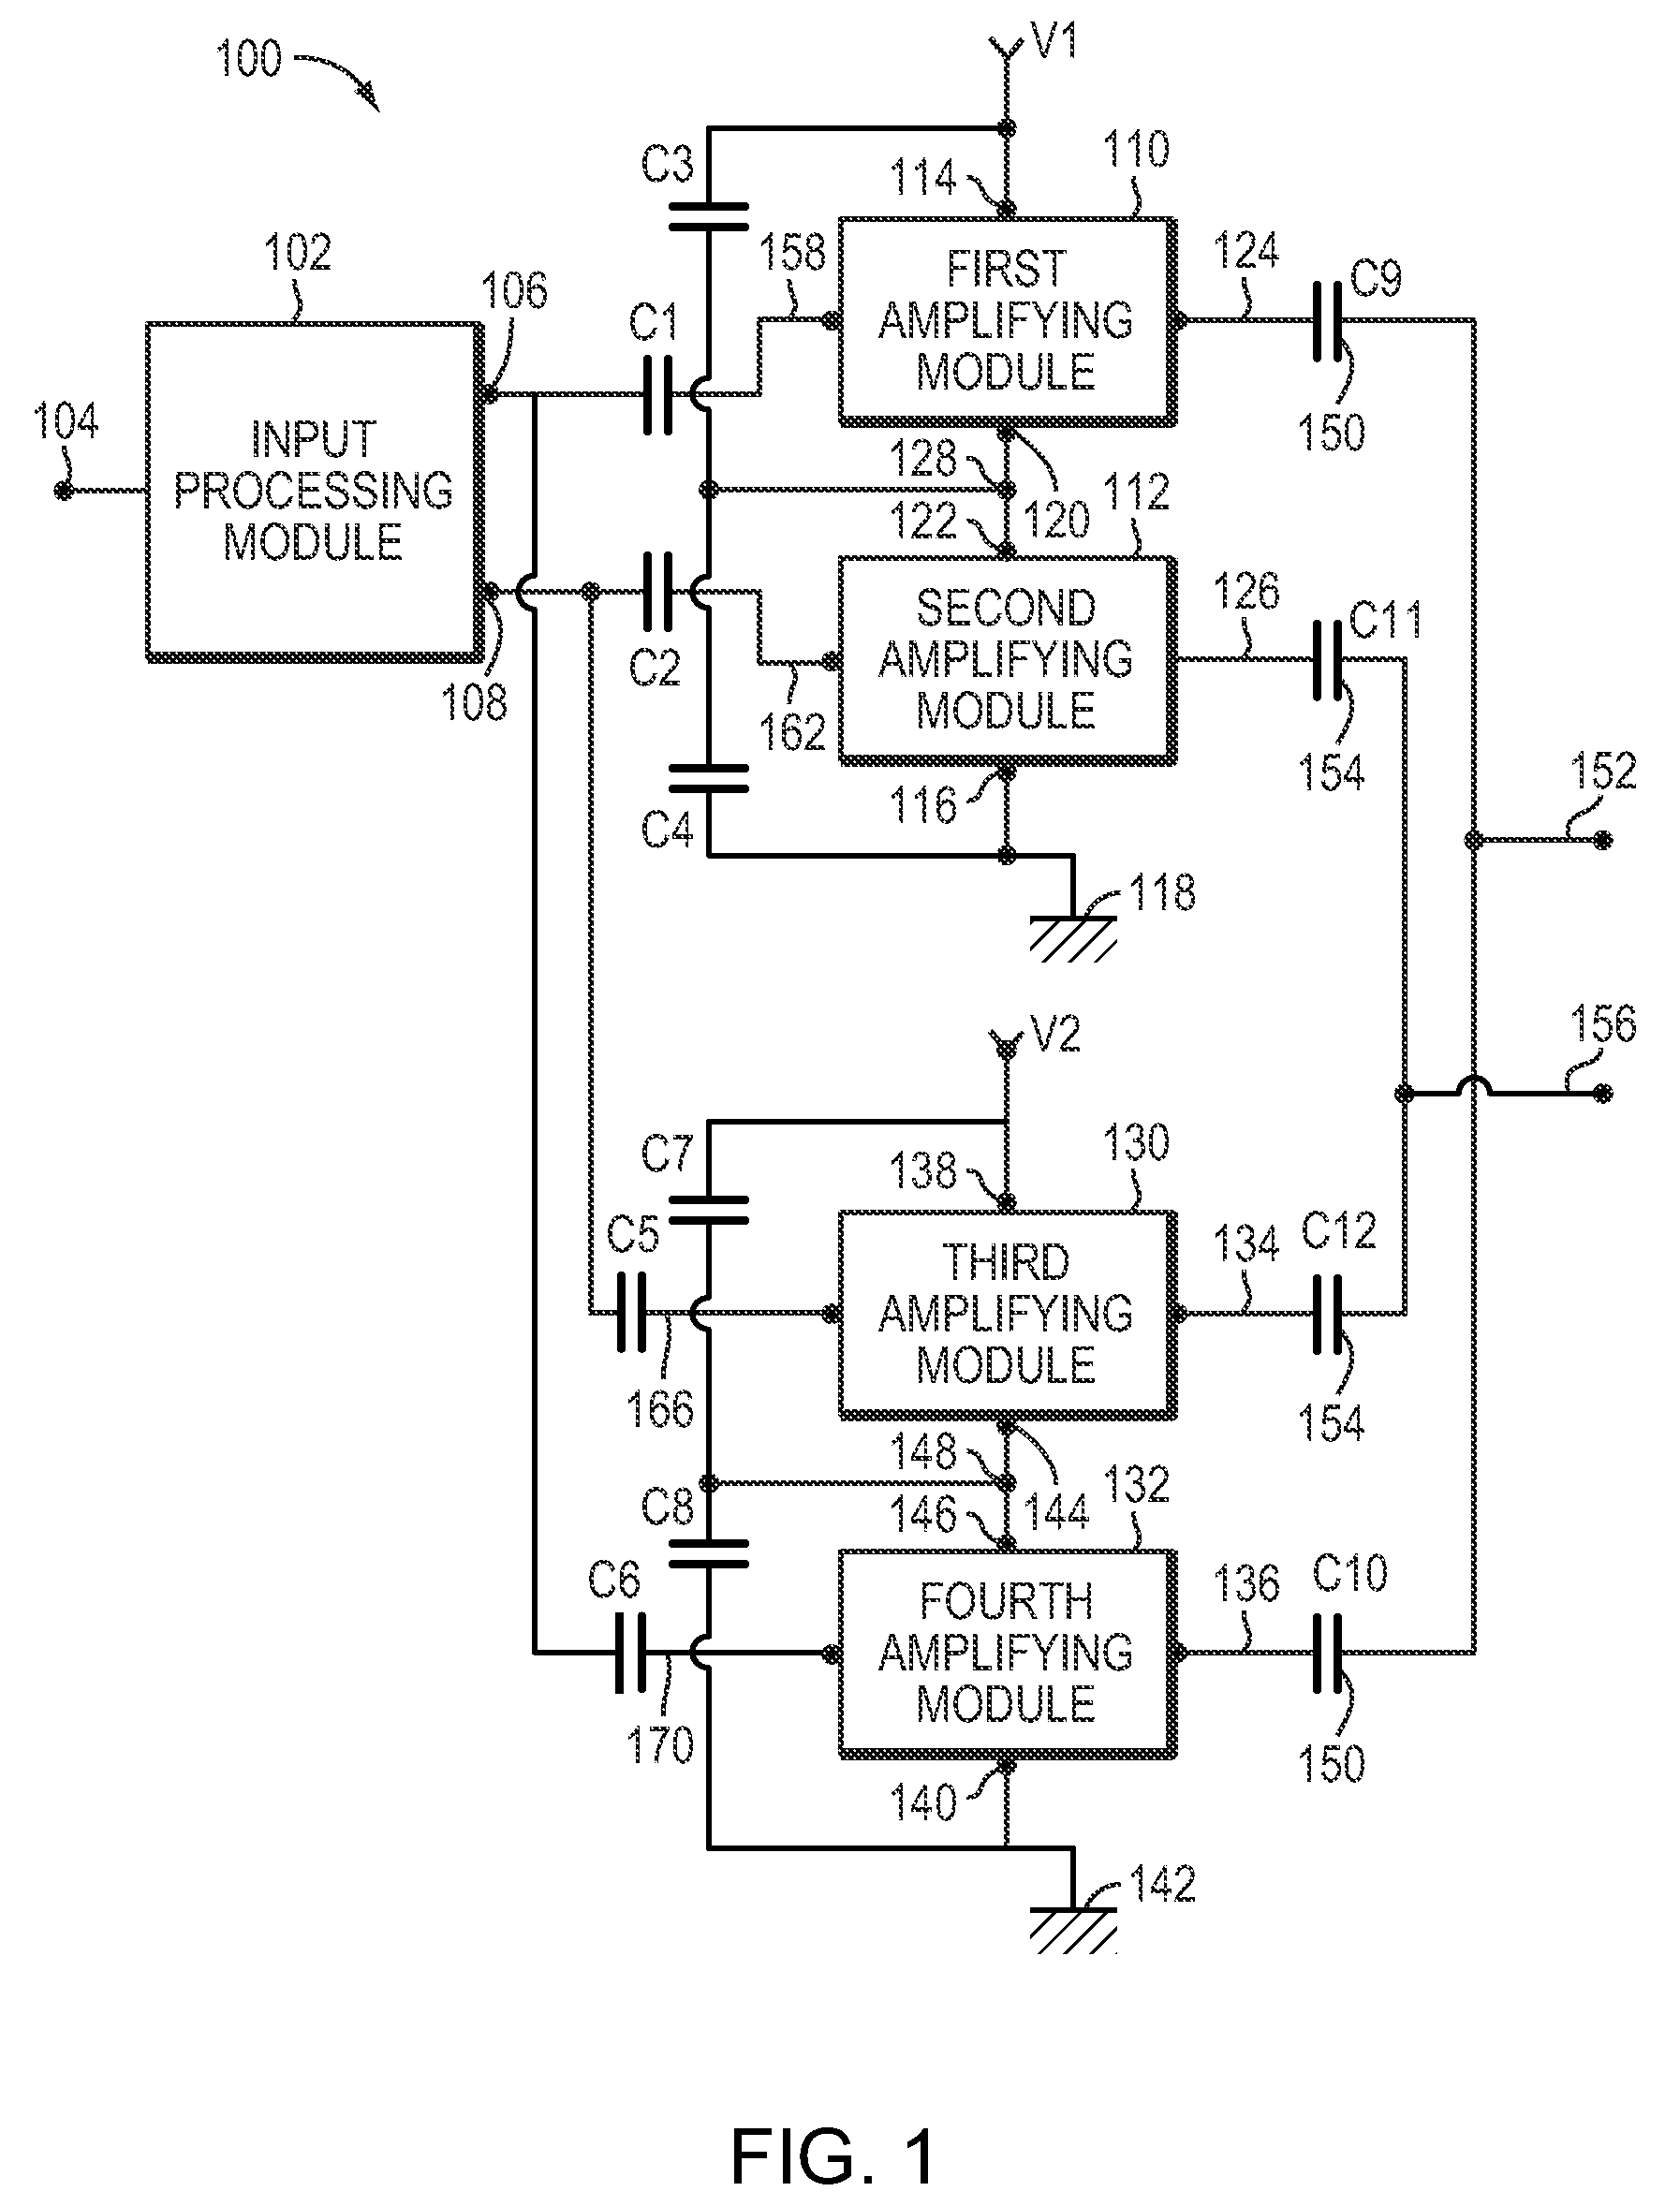 Wideband RF amplifiers